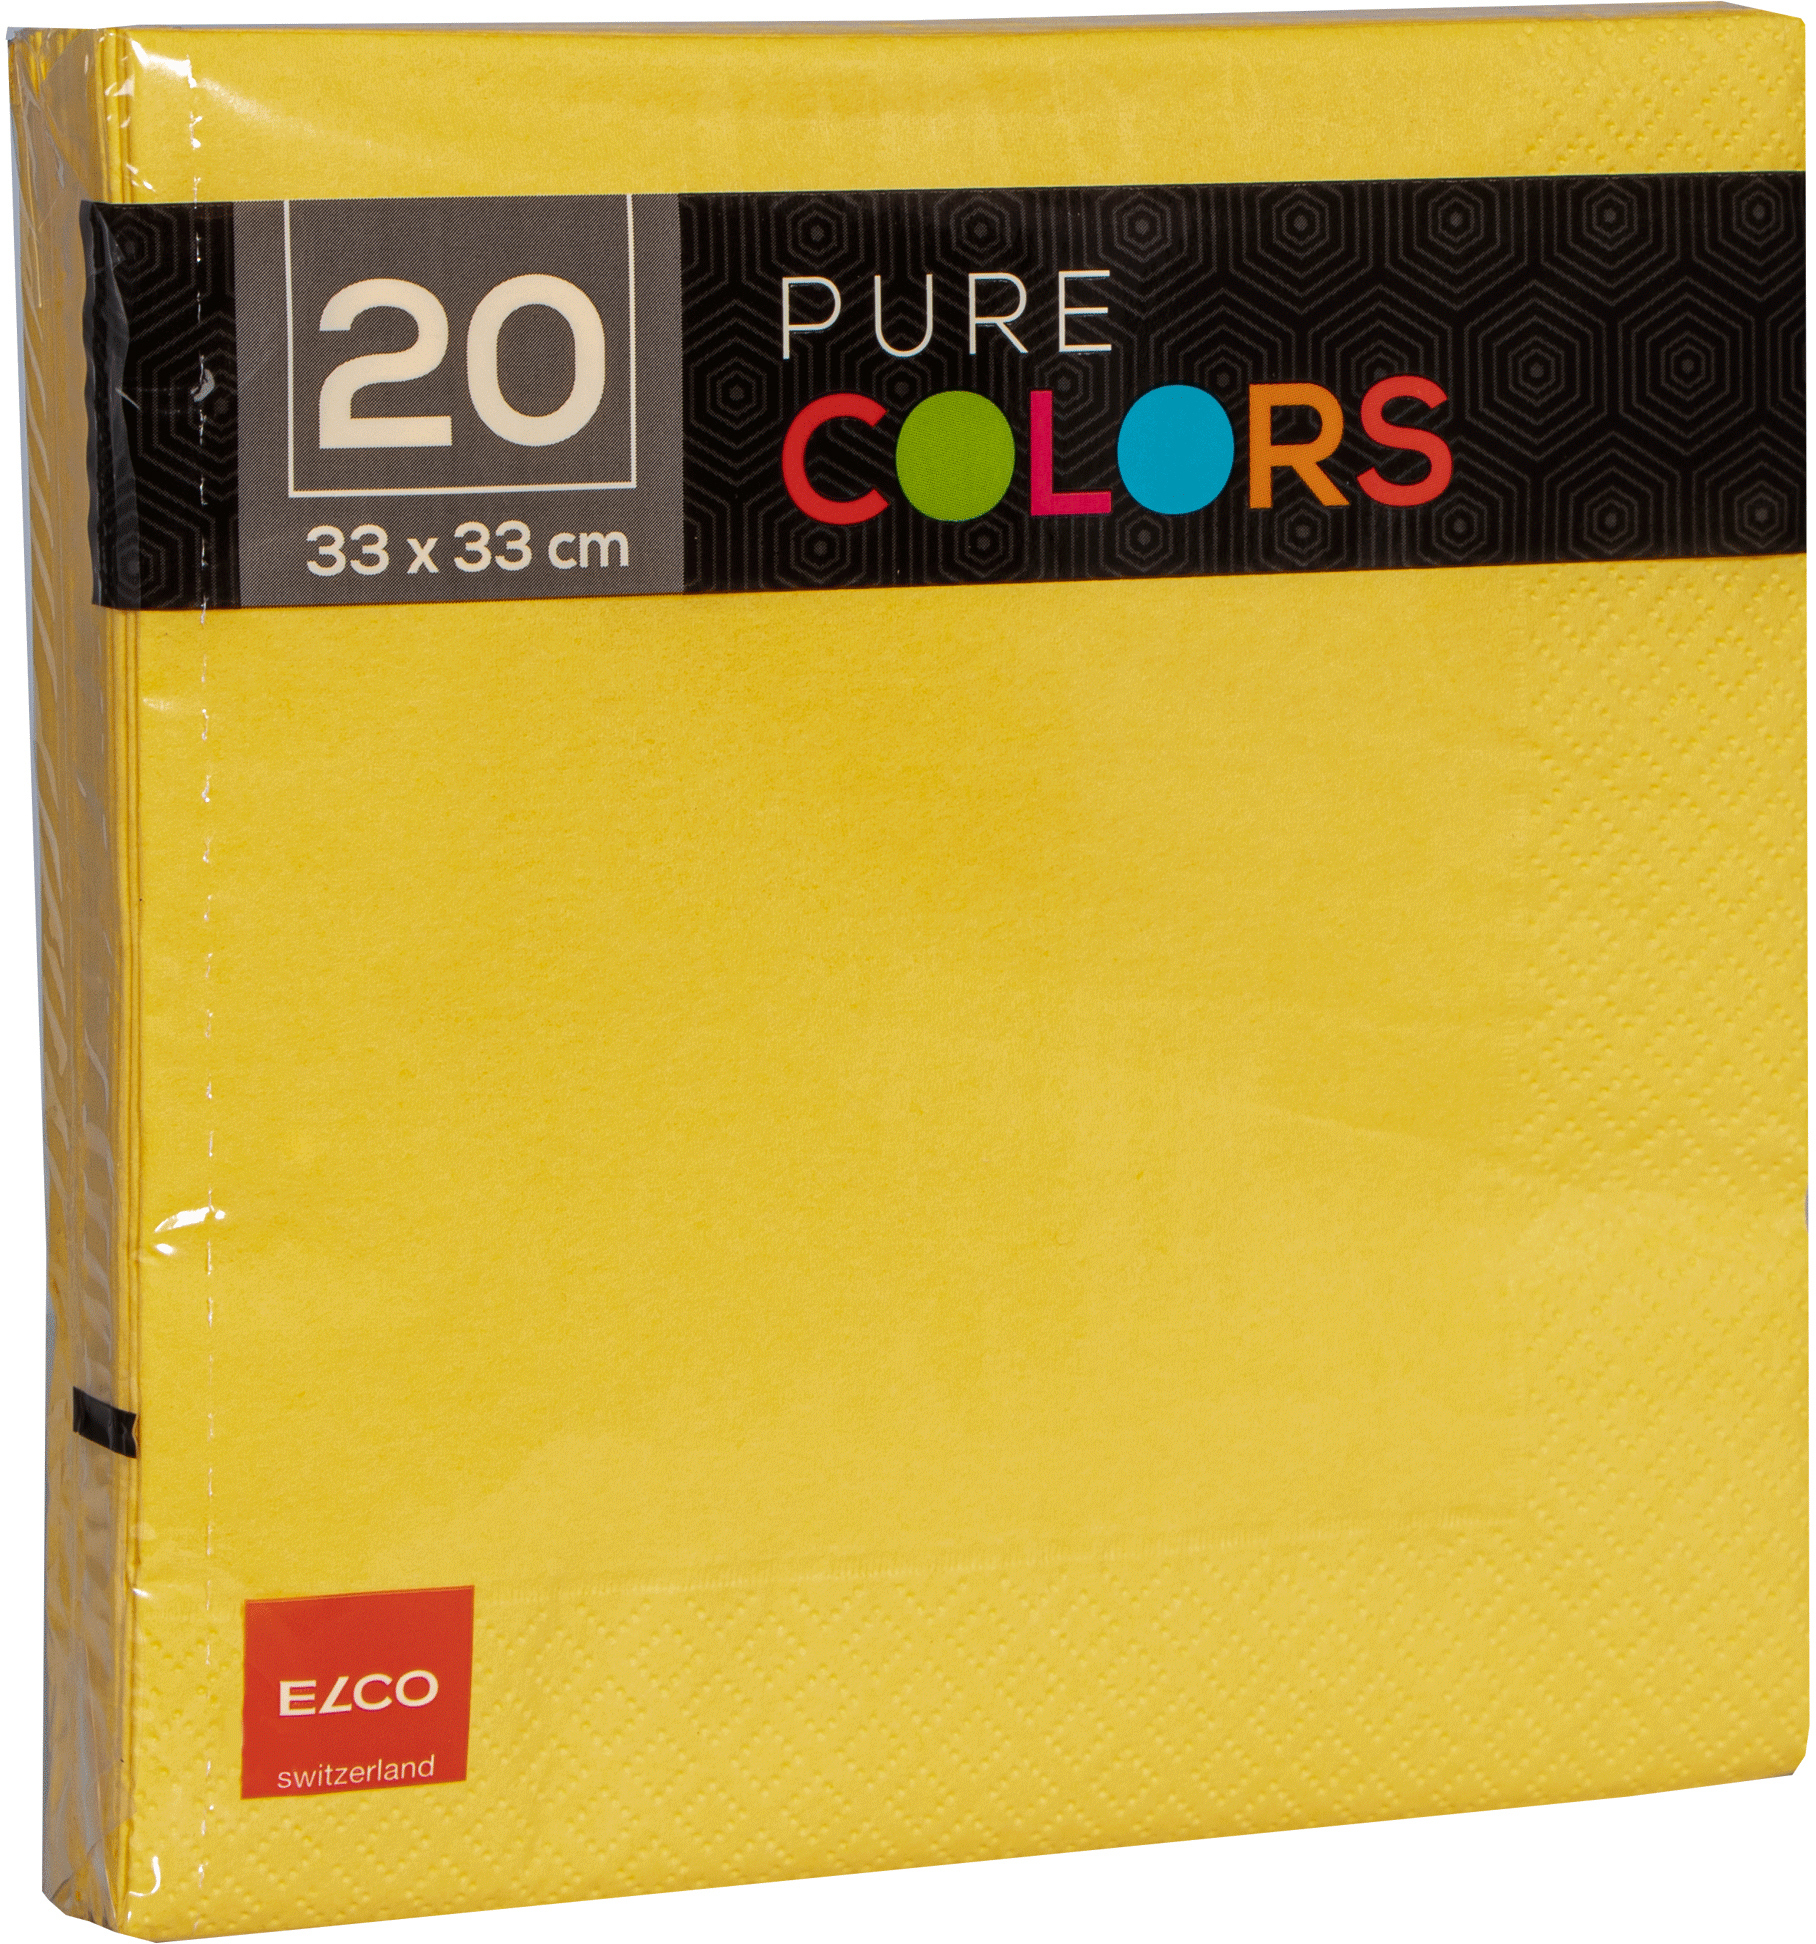 ELCO Serviettes tissue 33x33cm PC334020-010 3 plis, jaune 20pcs.